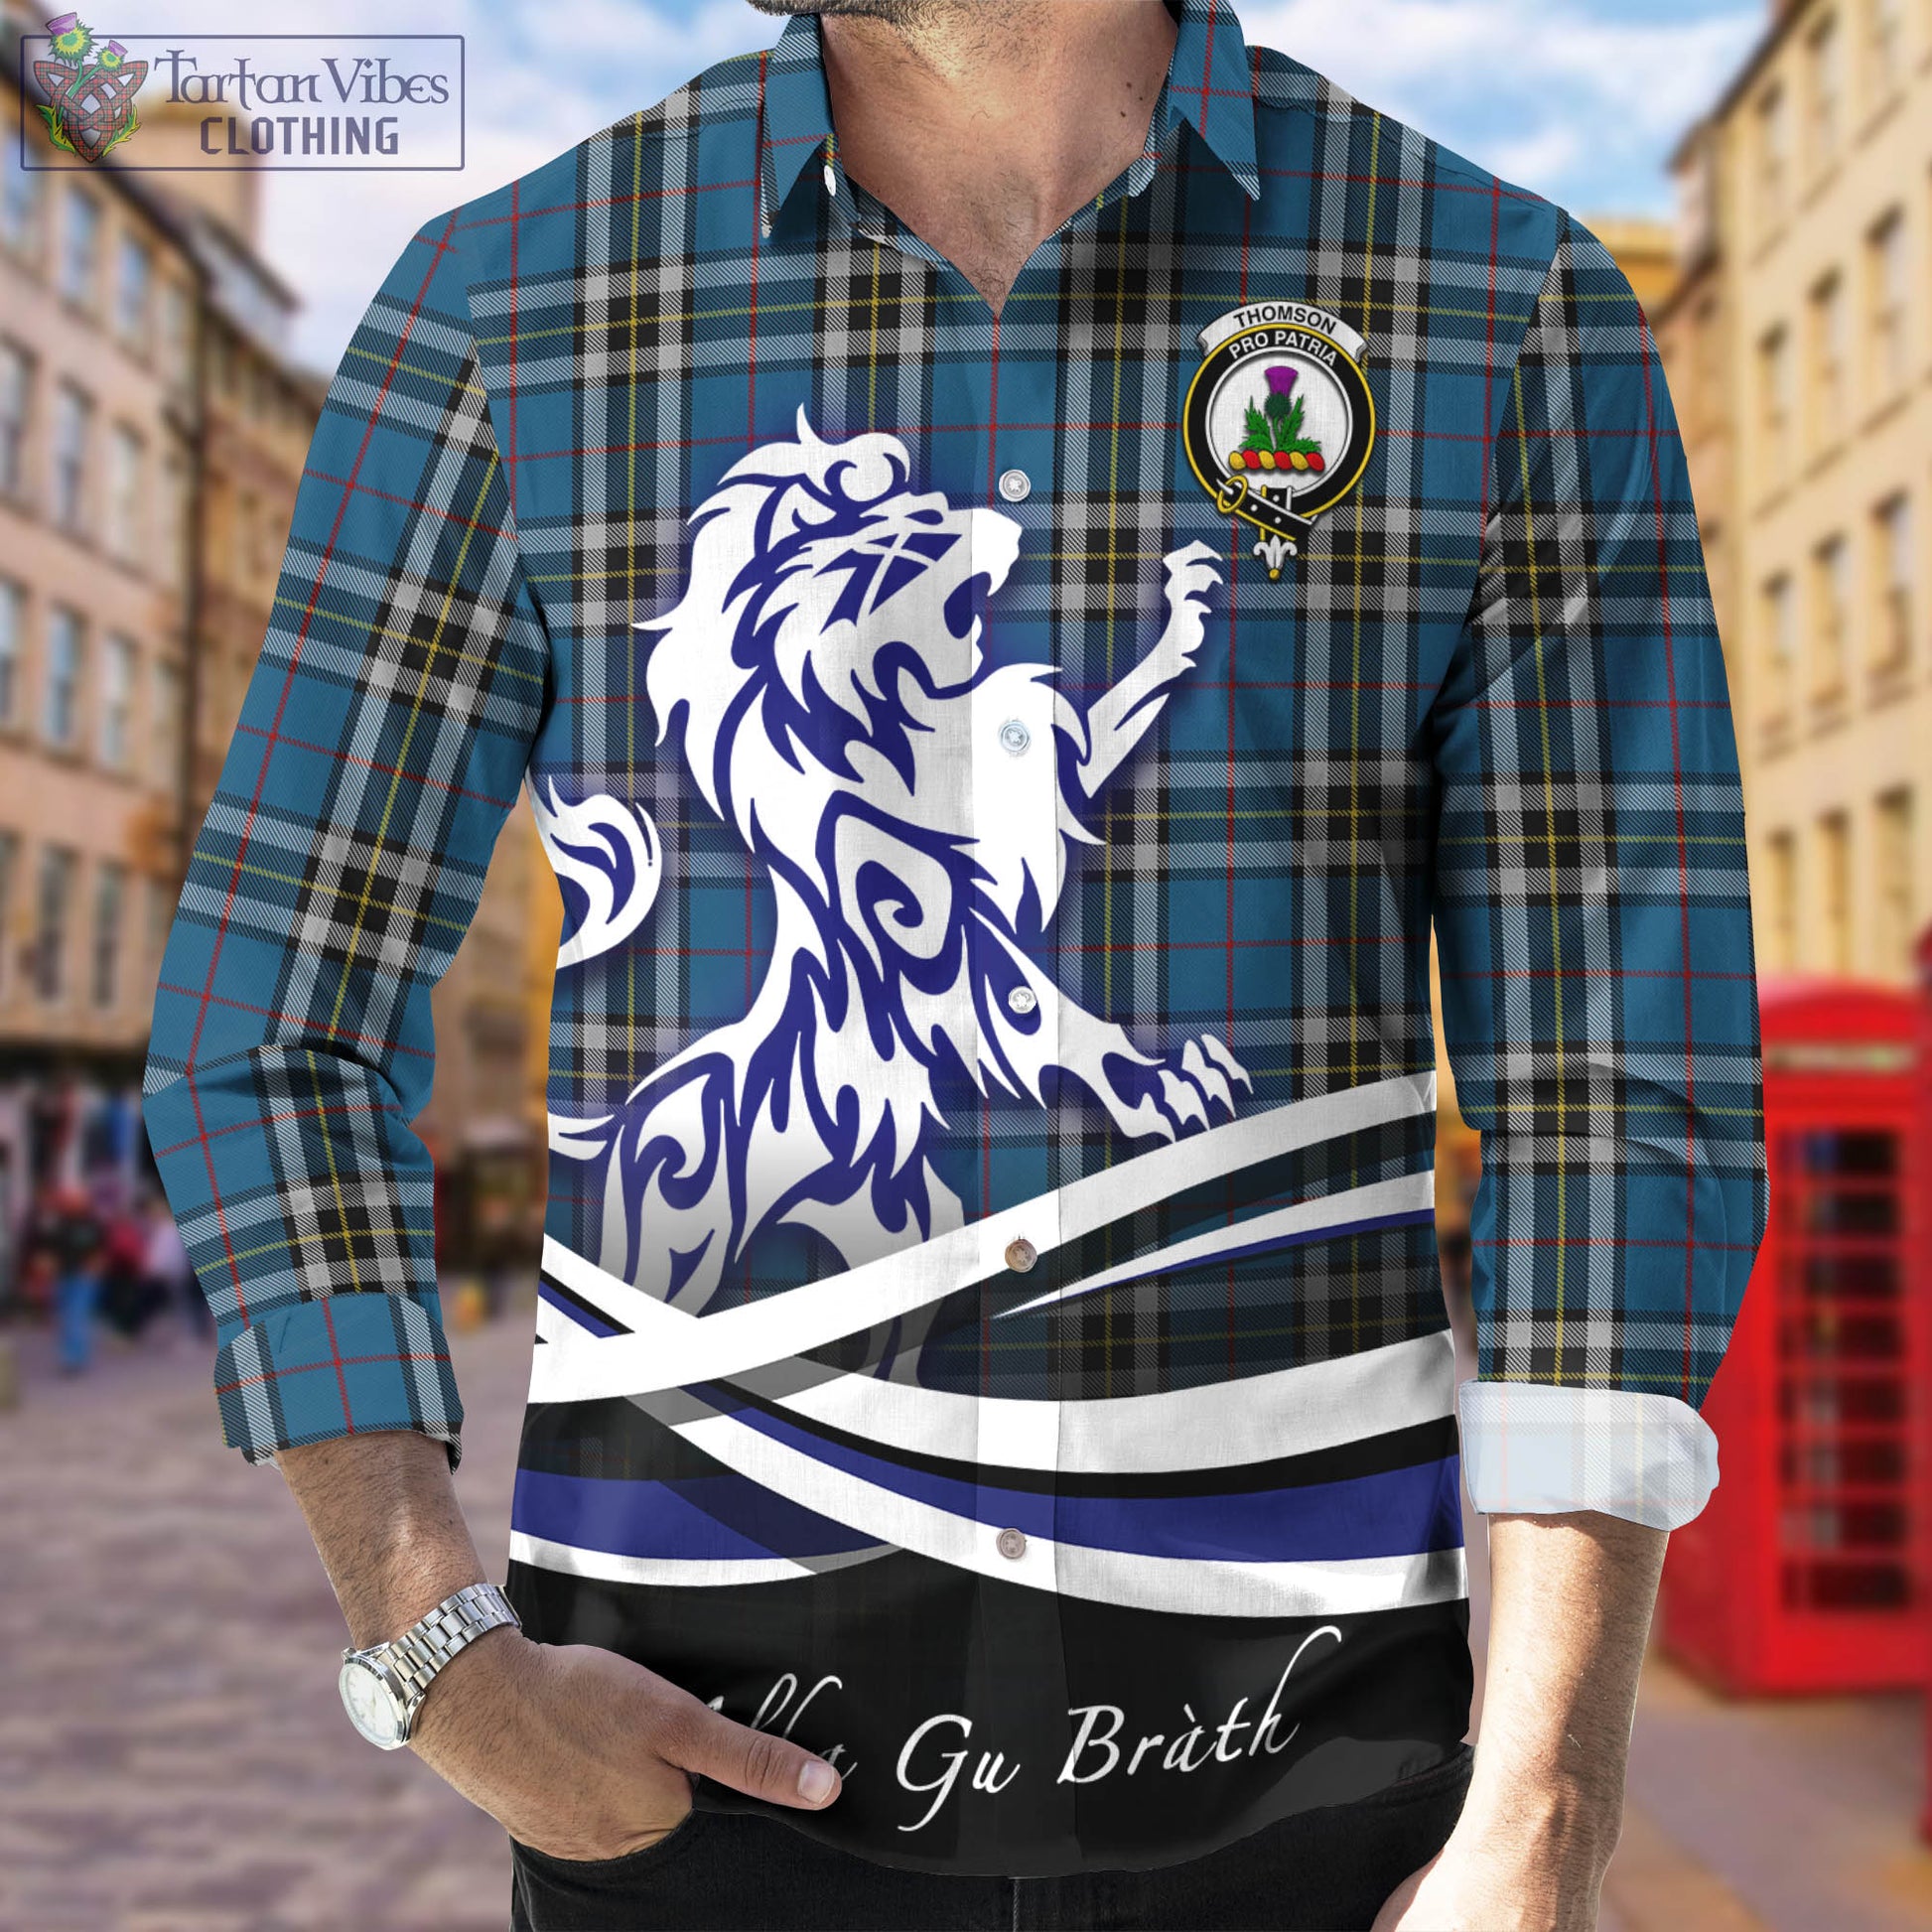 thomson-dress-blue-tartan-long-sleeve-button-up-shirt-with-alba-gu-brath-regal-lion-emblem